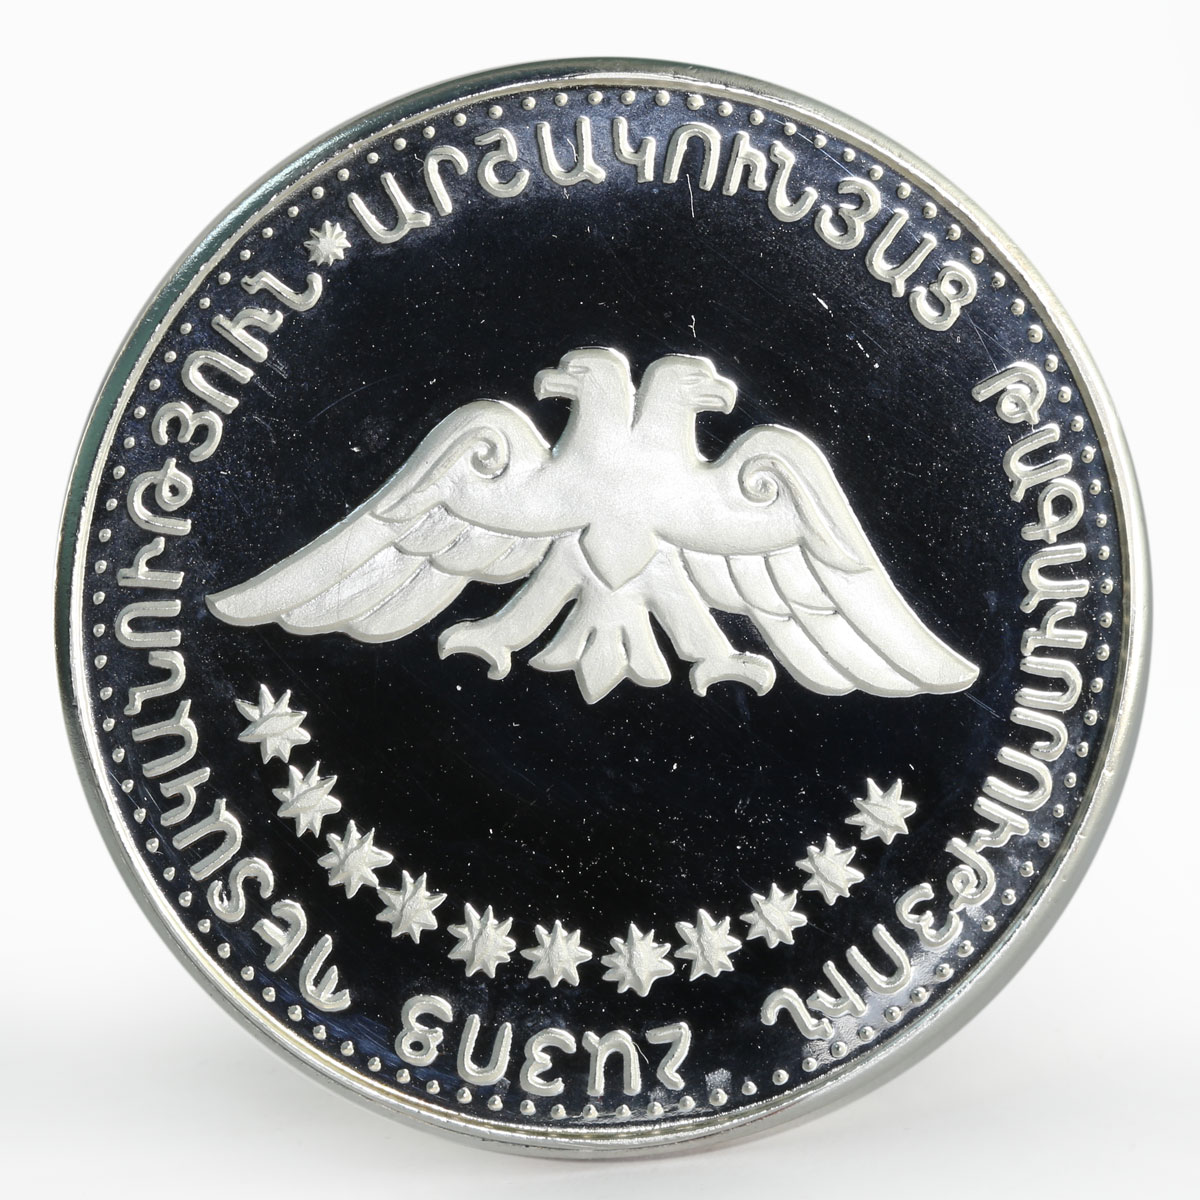 Armenia 500 dram Arshakonni Dynasty proof silver coin 1995